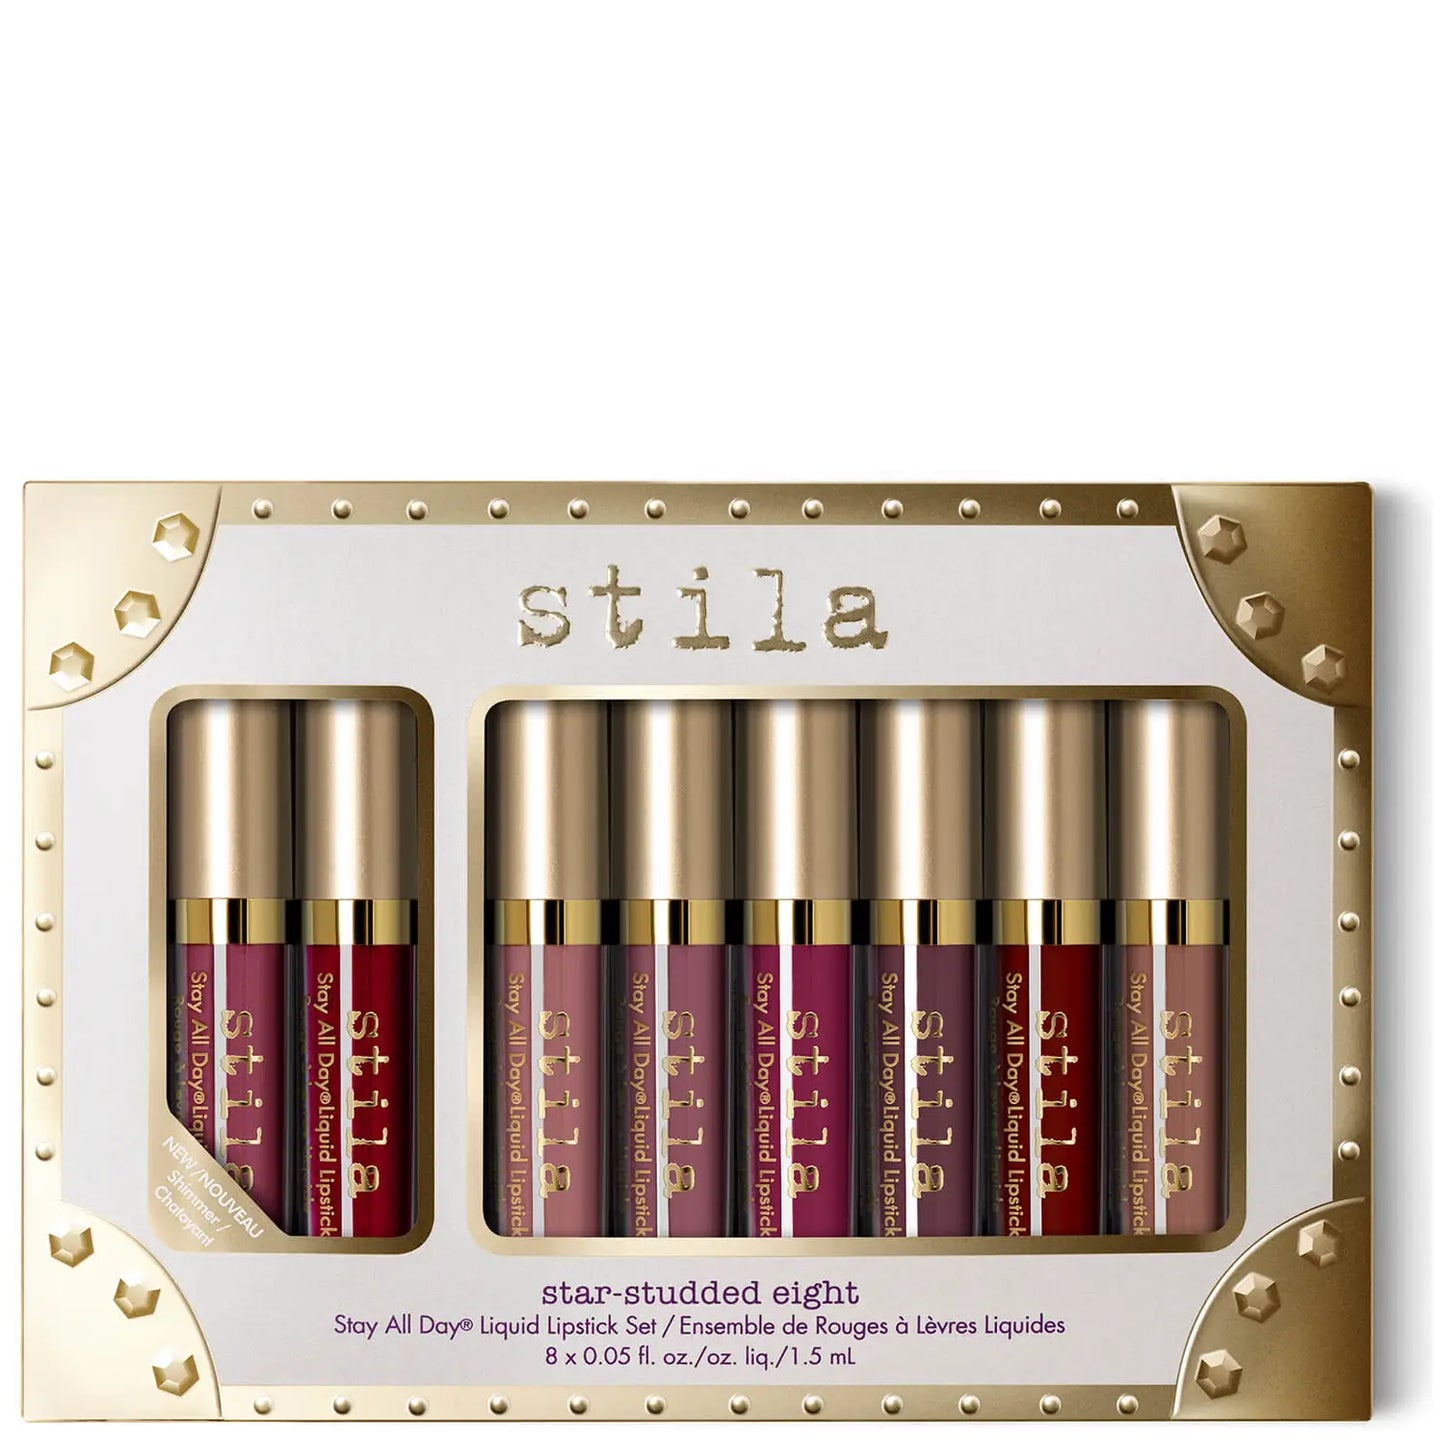 Stila Star-Studded Eight - Stay All Day Liquid Lipstick Set worth £64